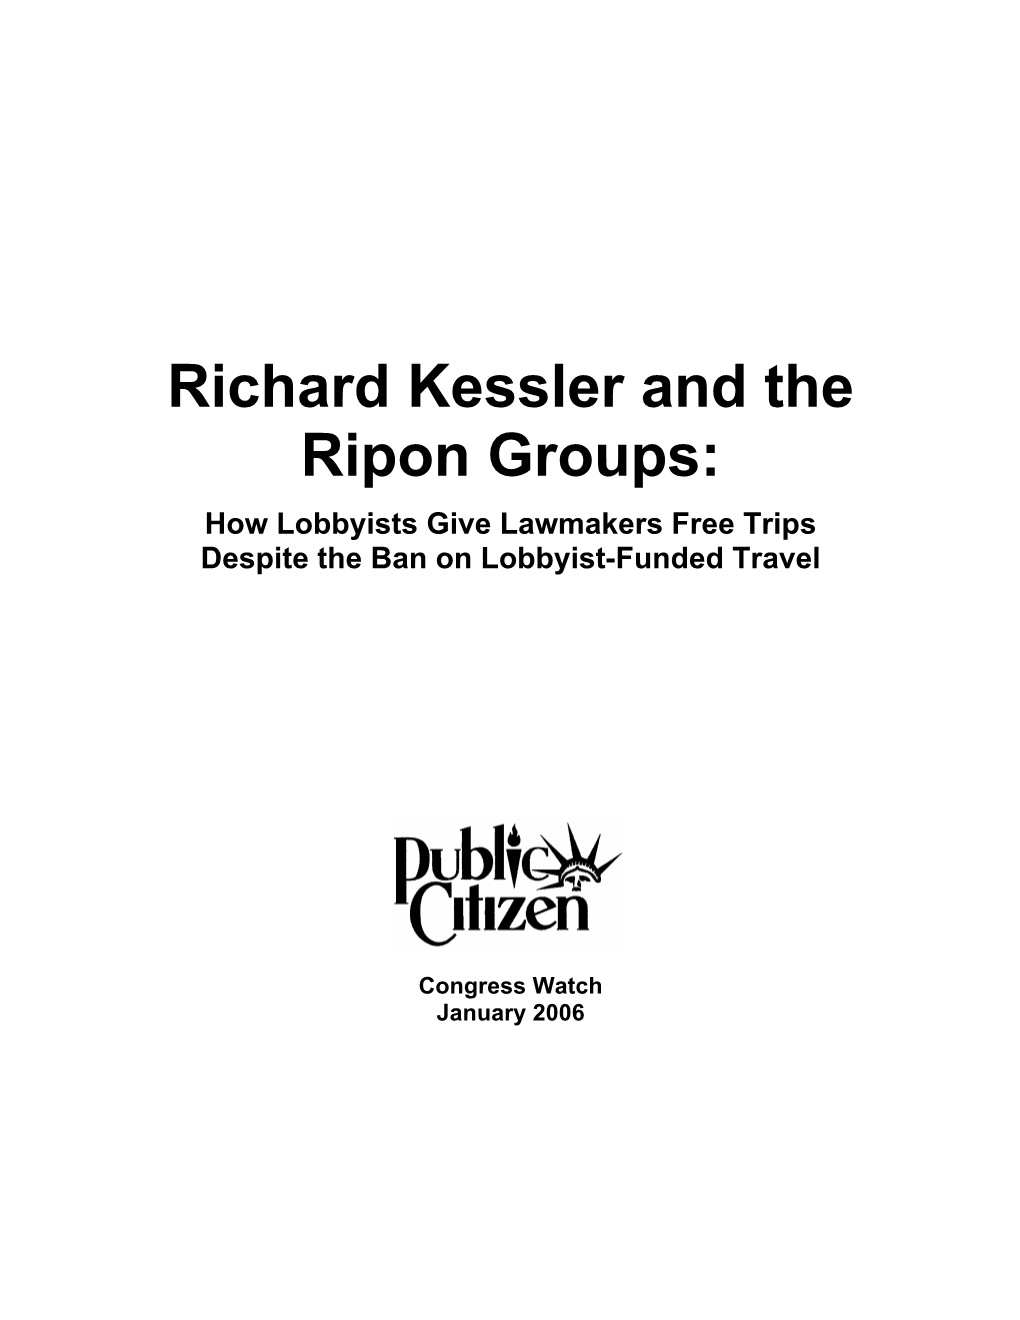 Richard Kessler and the Ripon Groups